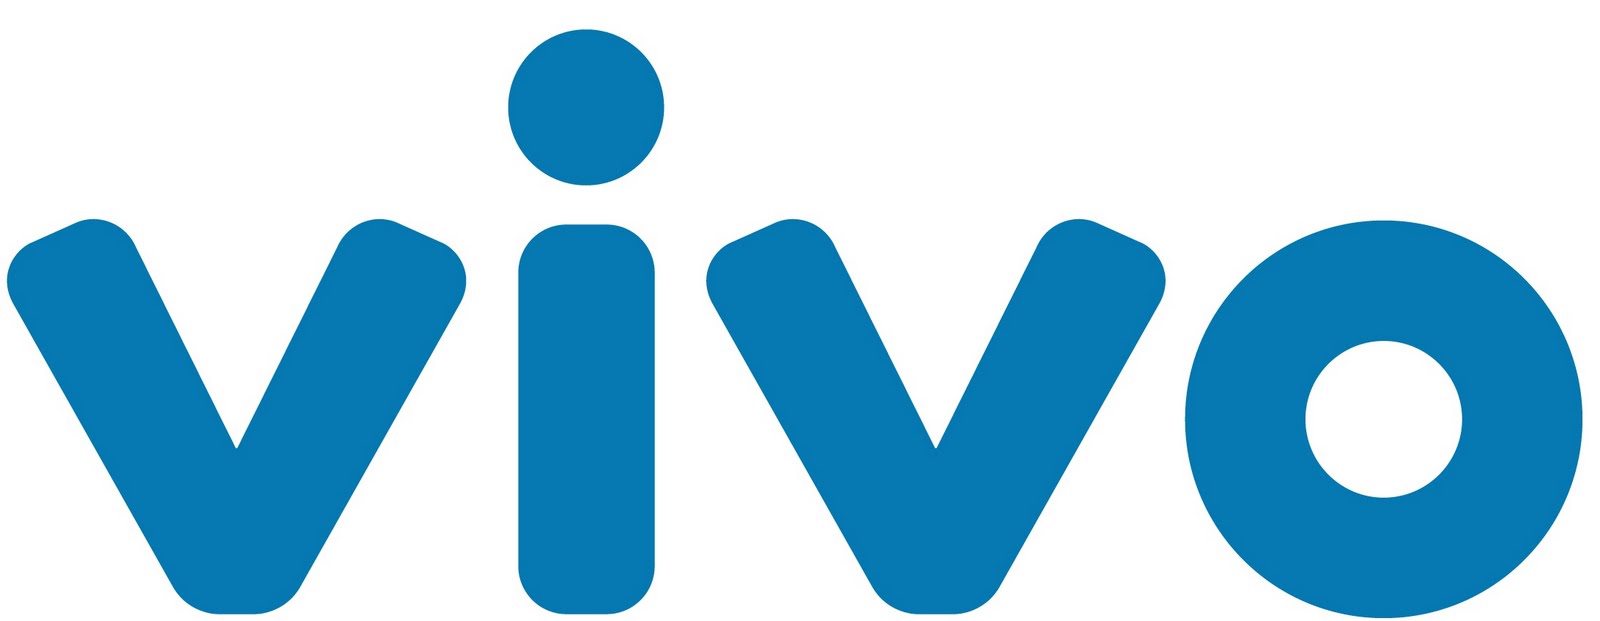 Vivo (telecommunications) logo